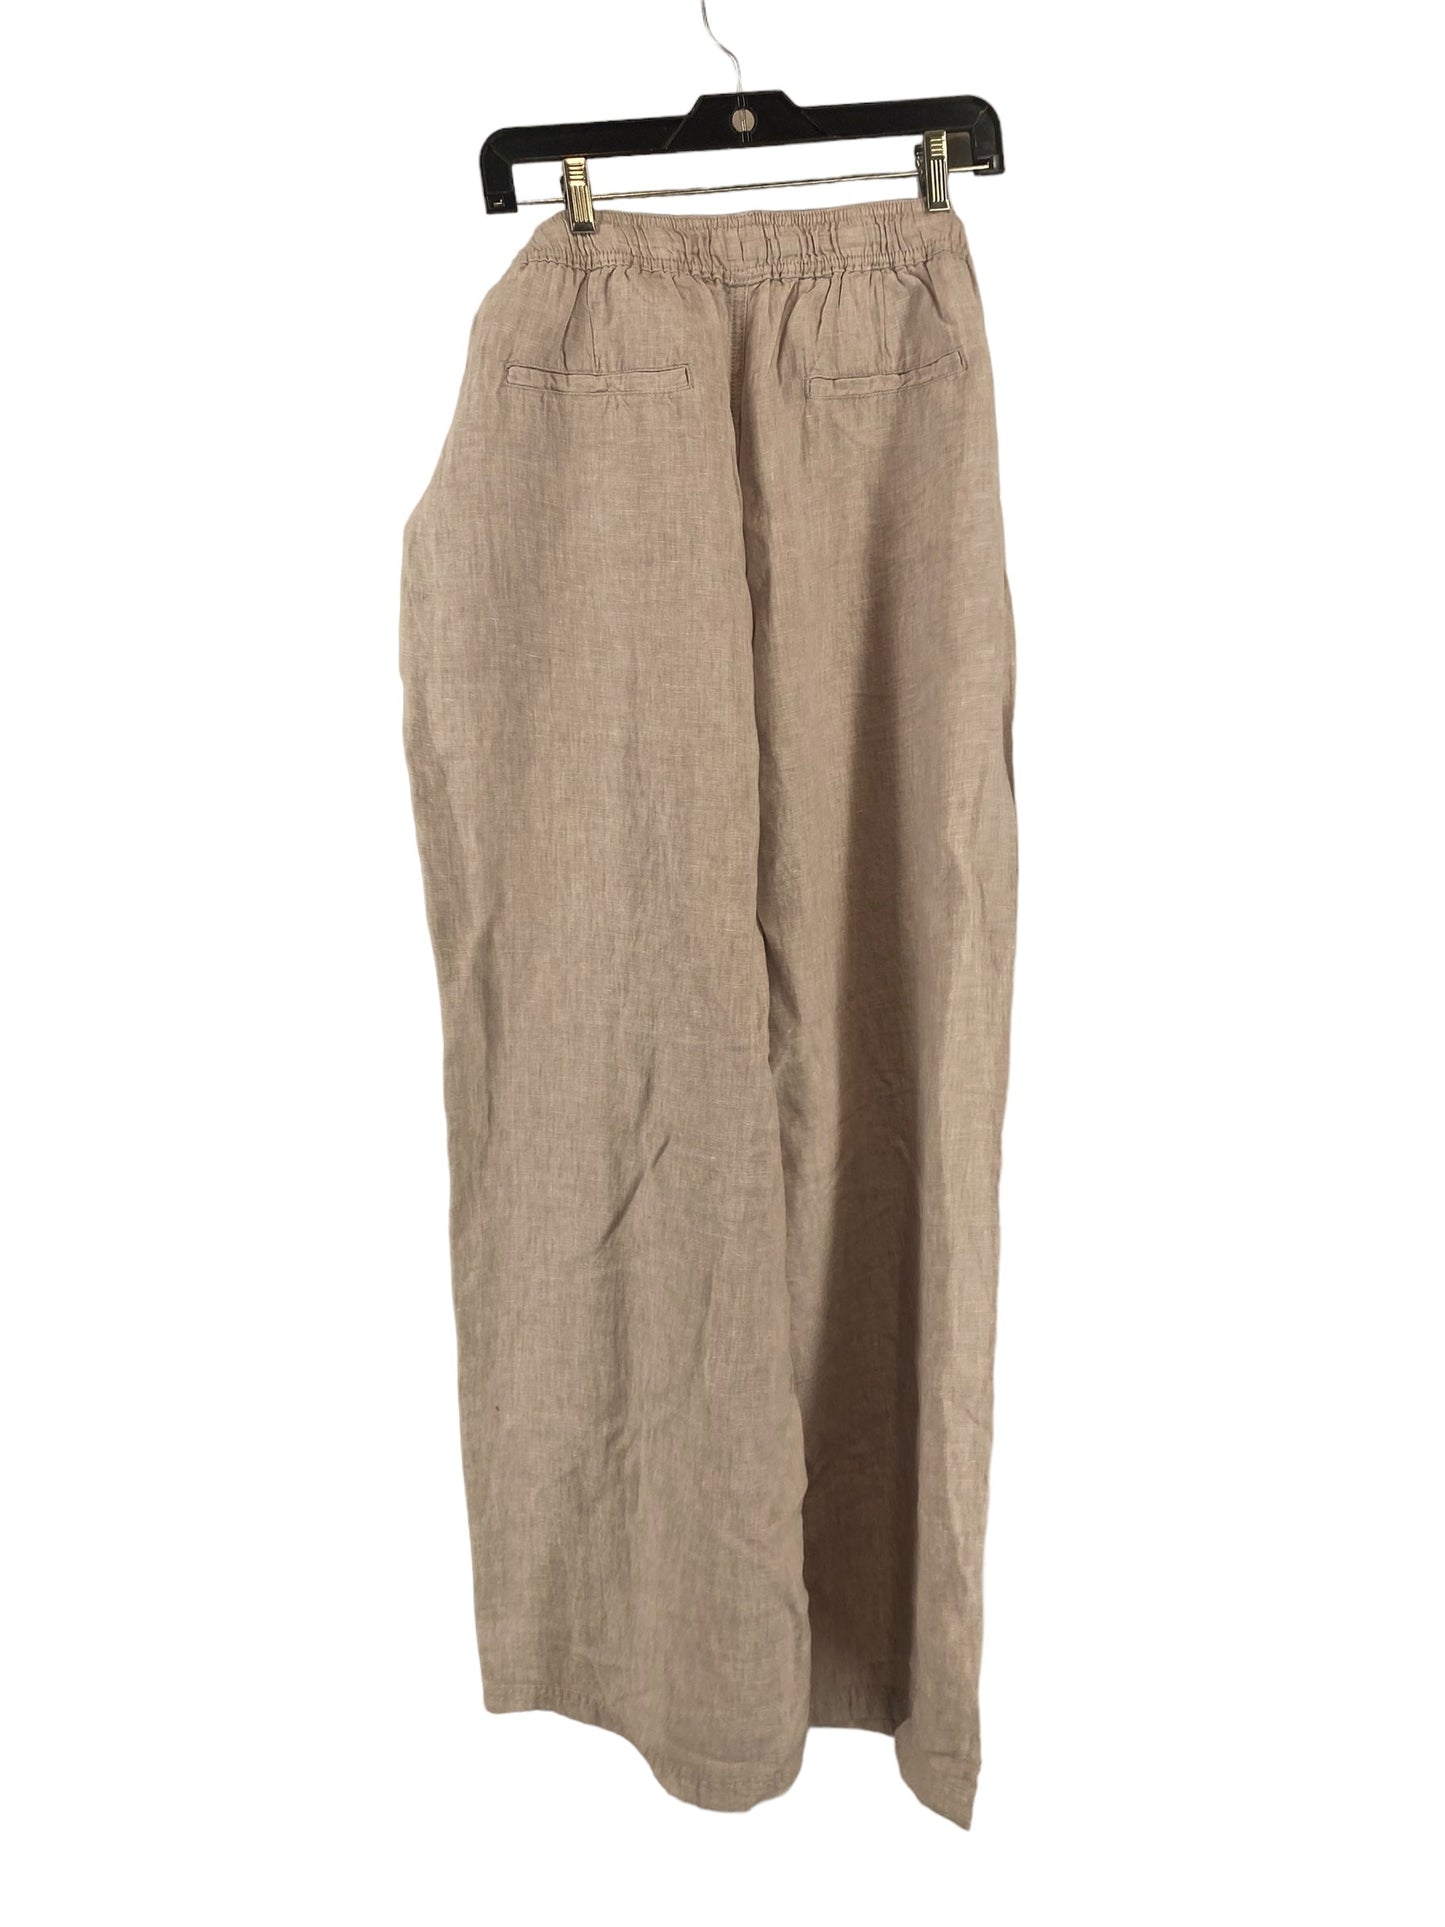 Pants Linen By Jones New York  Size: 1x